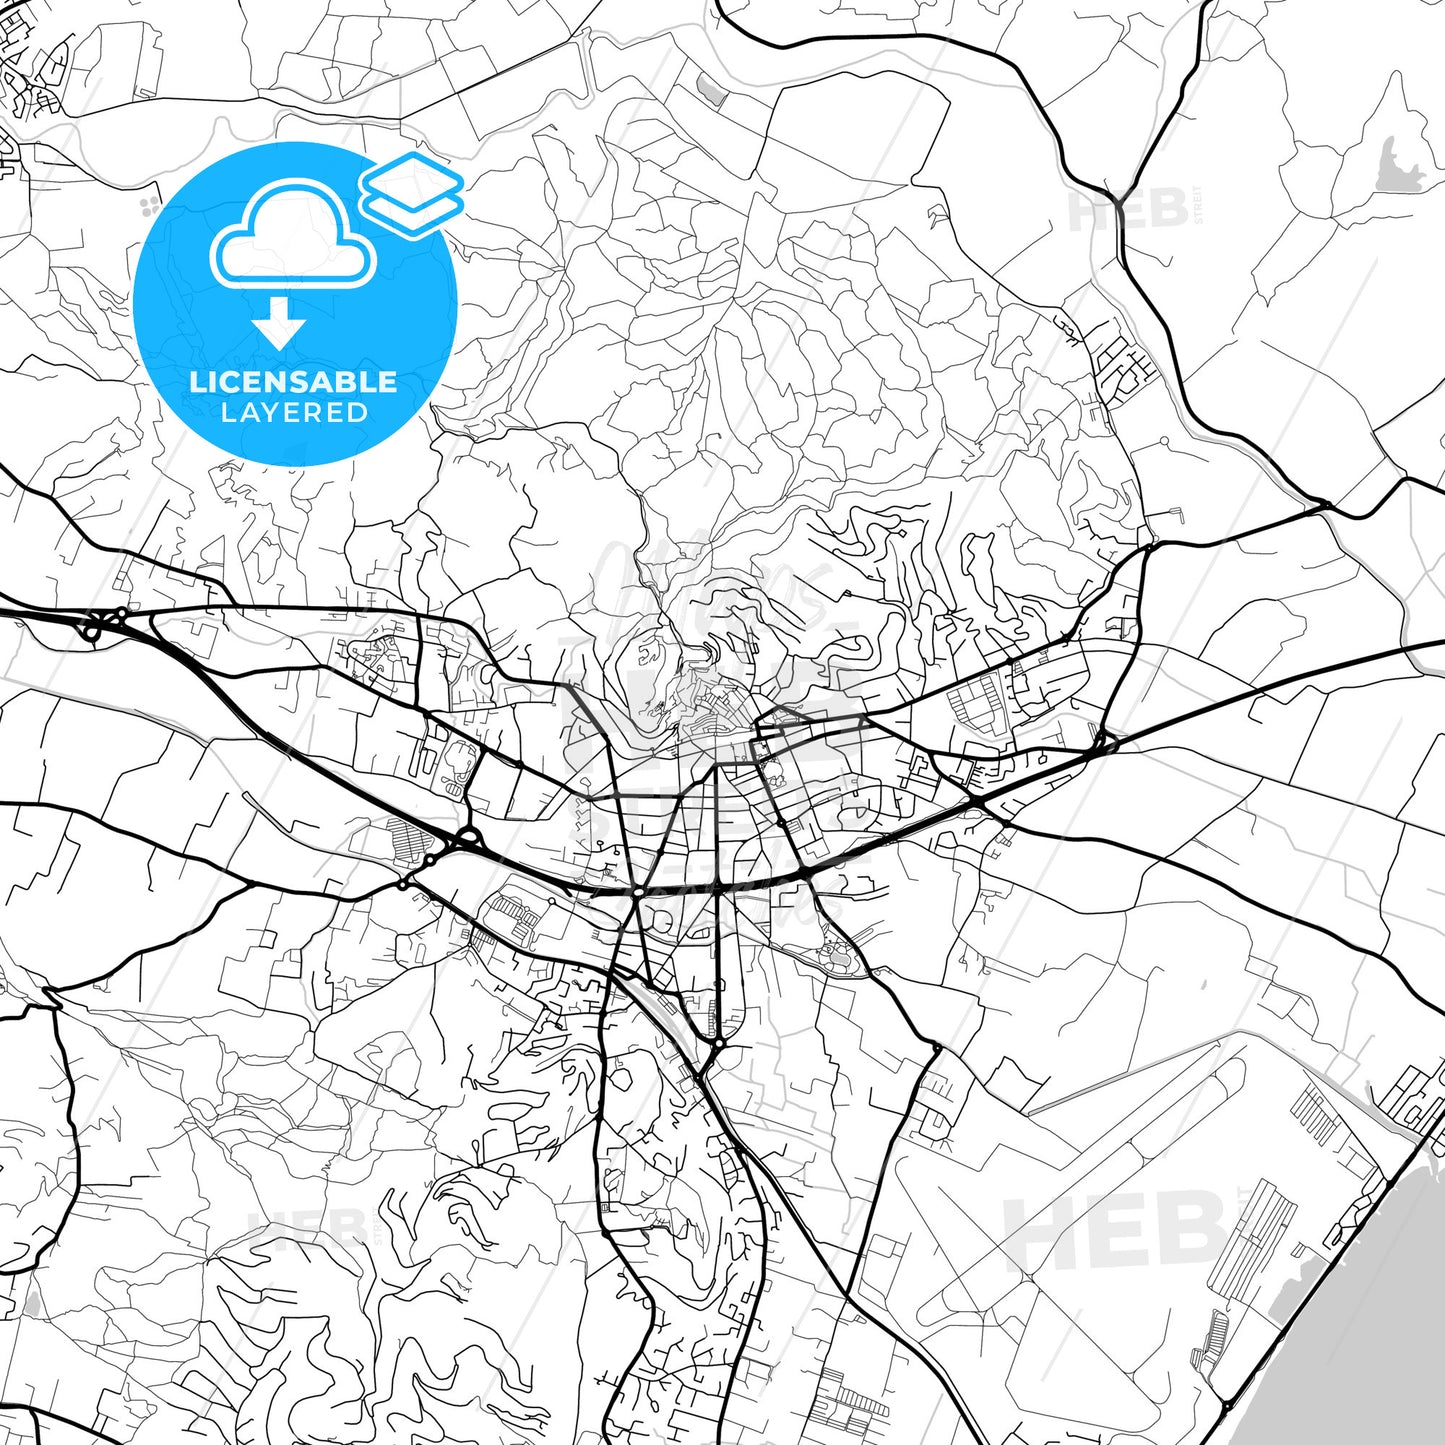 Layered PDF map of Hyères, Var, France